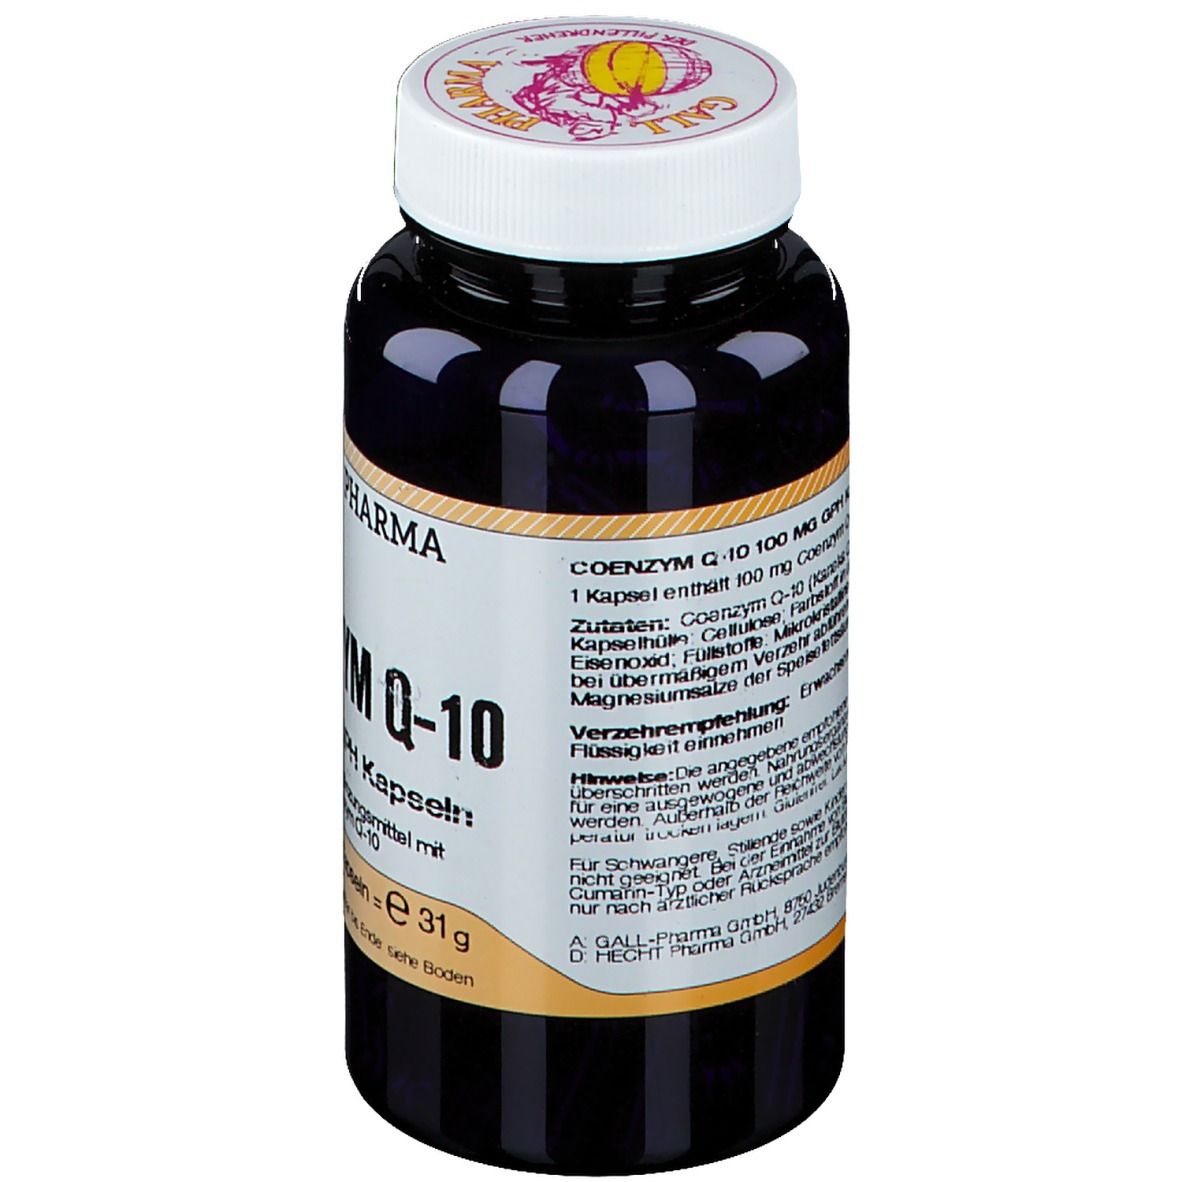 GALL PHARMA Coenzym Q-10 100 mg GPH Kapseln